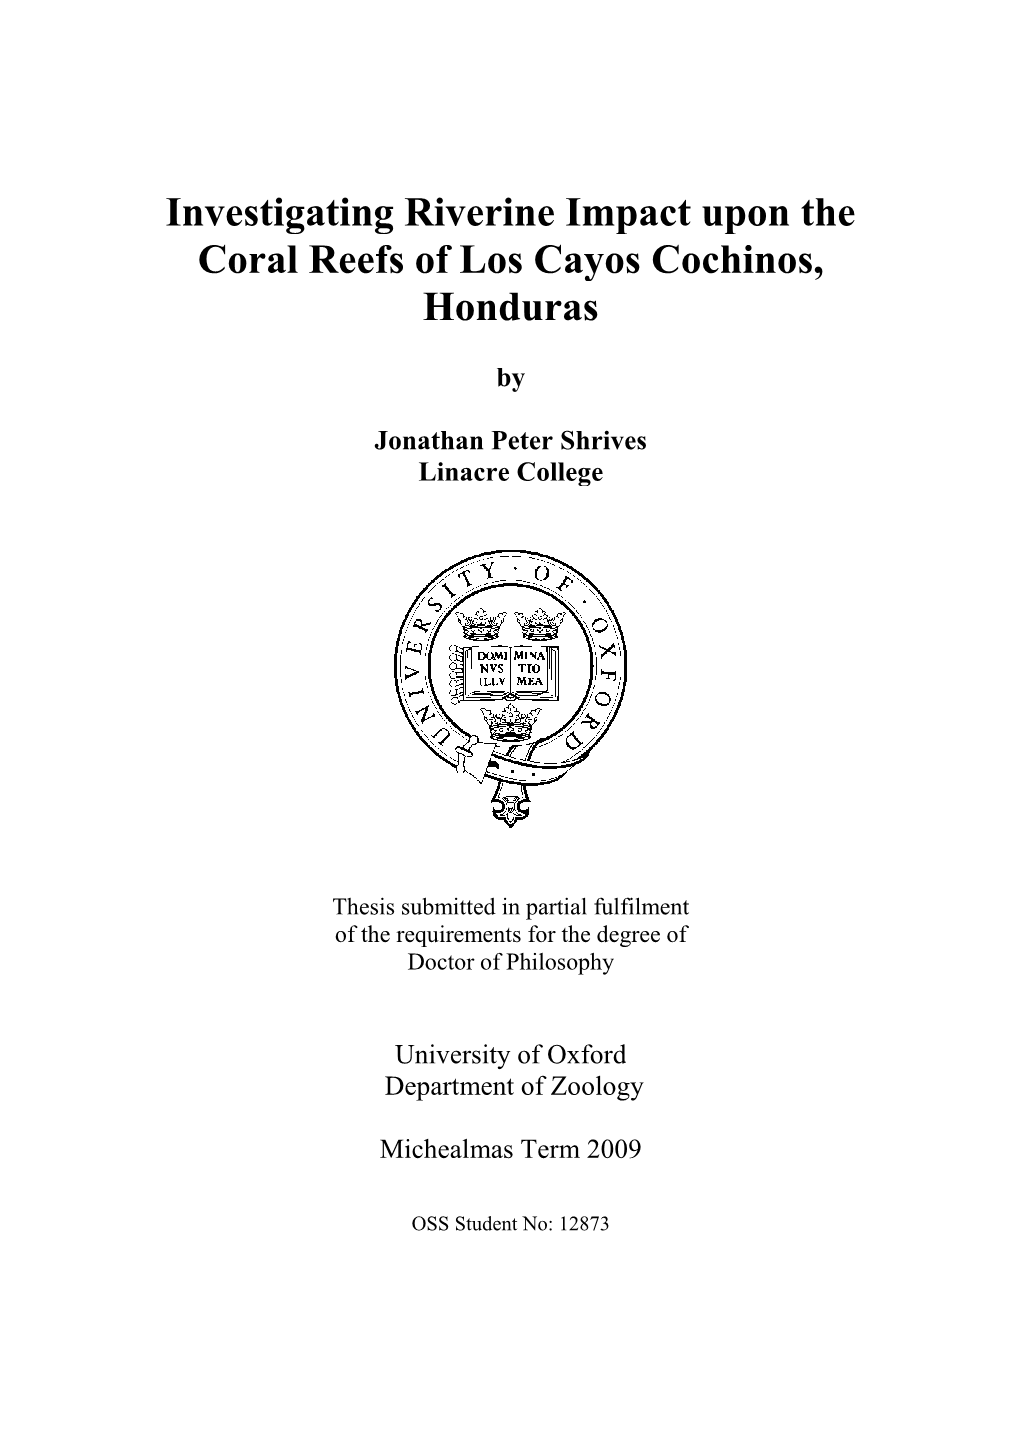 Investigating Riverine Impact Upon the Coral Reefs of Los Cayos Cochinos, Honduras